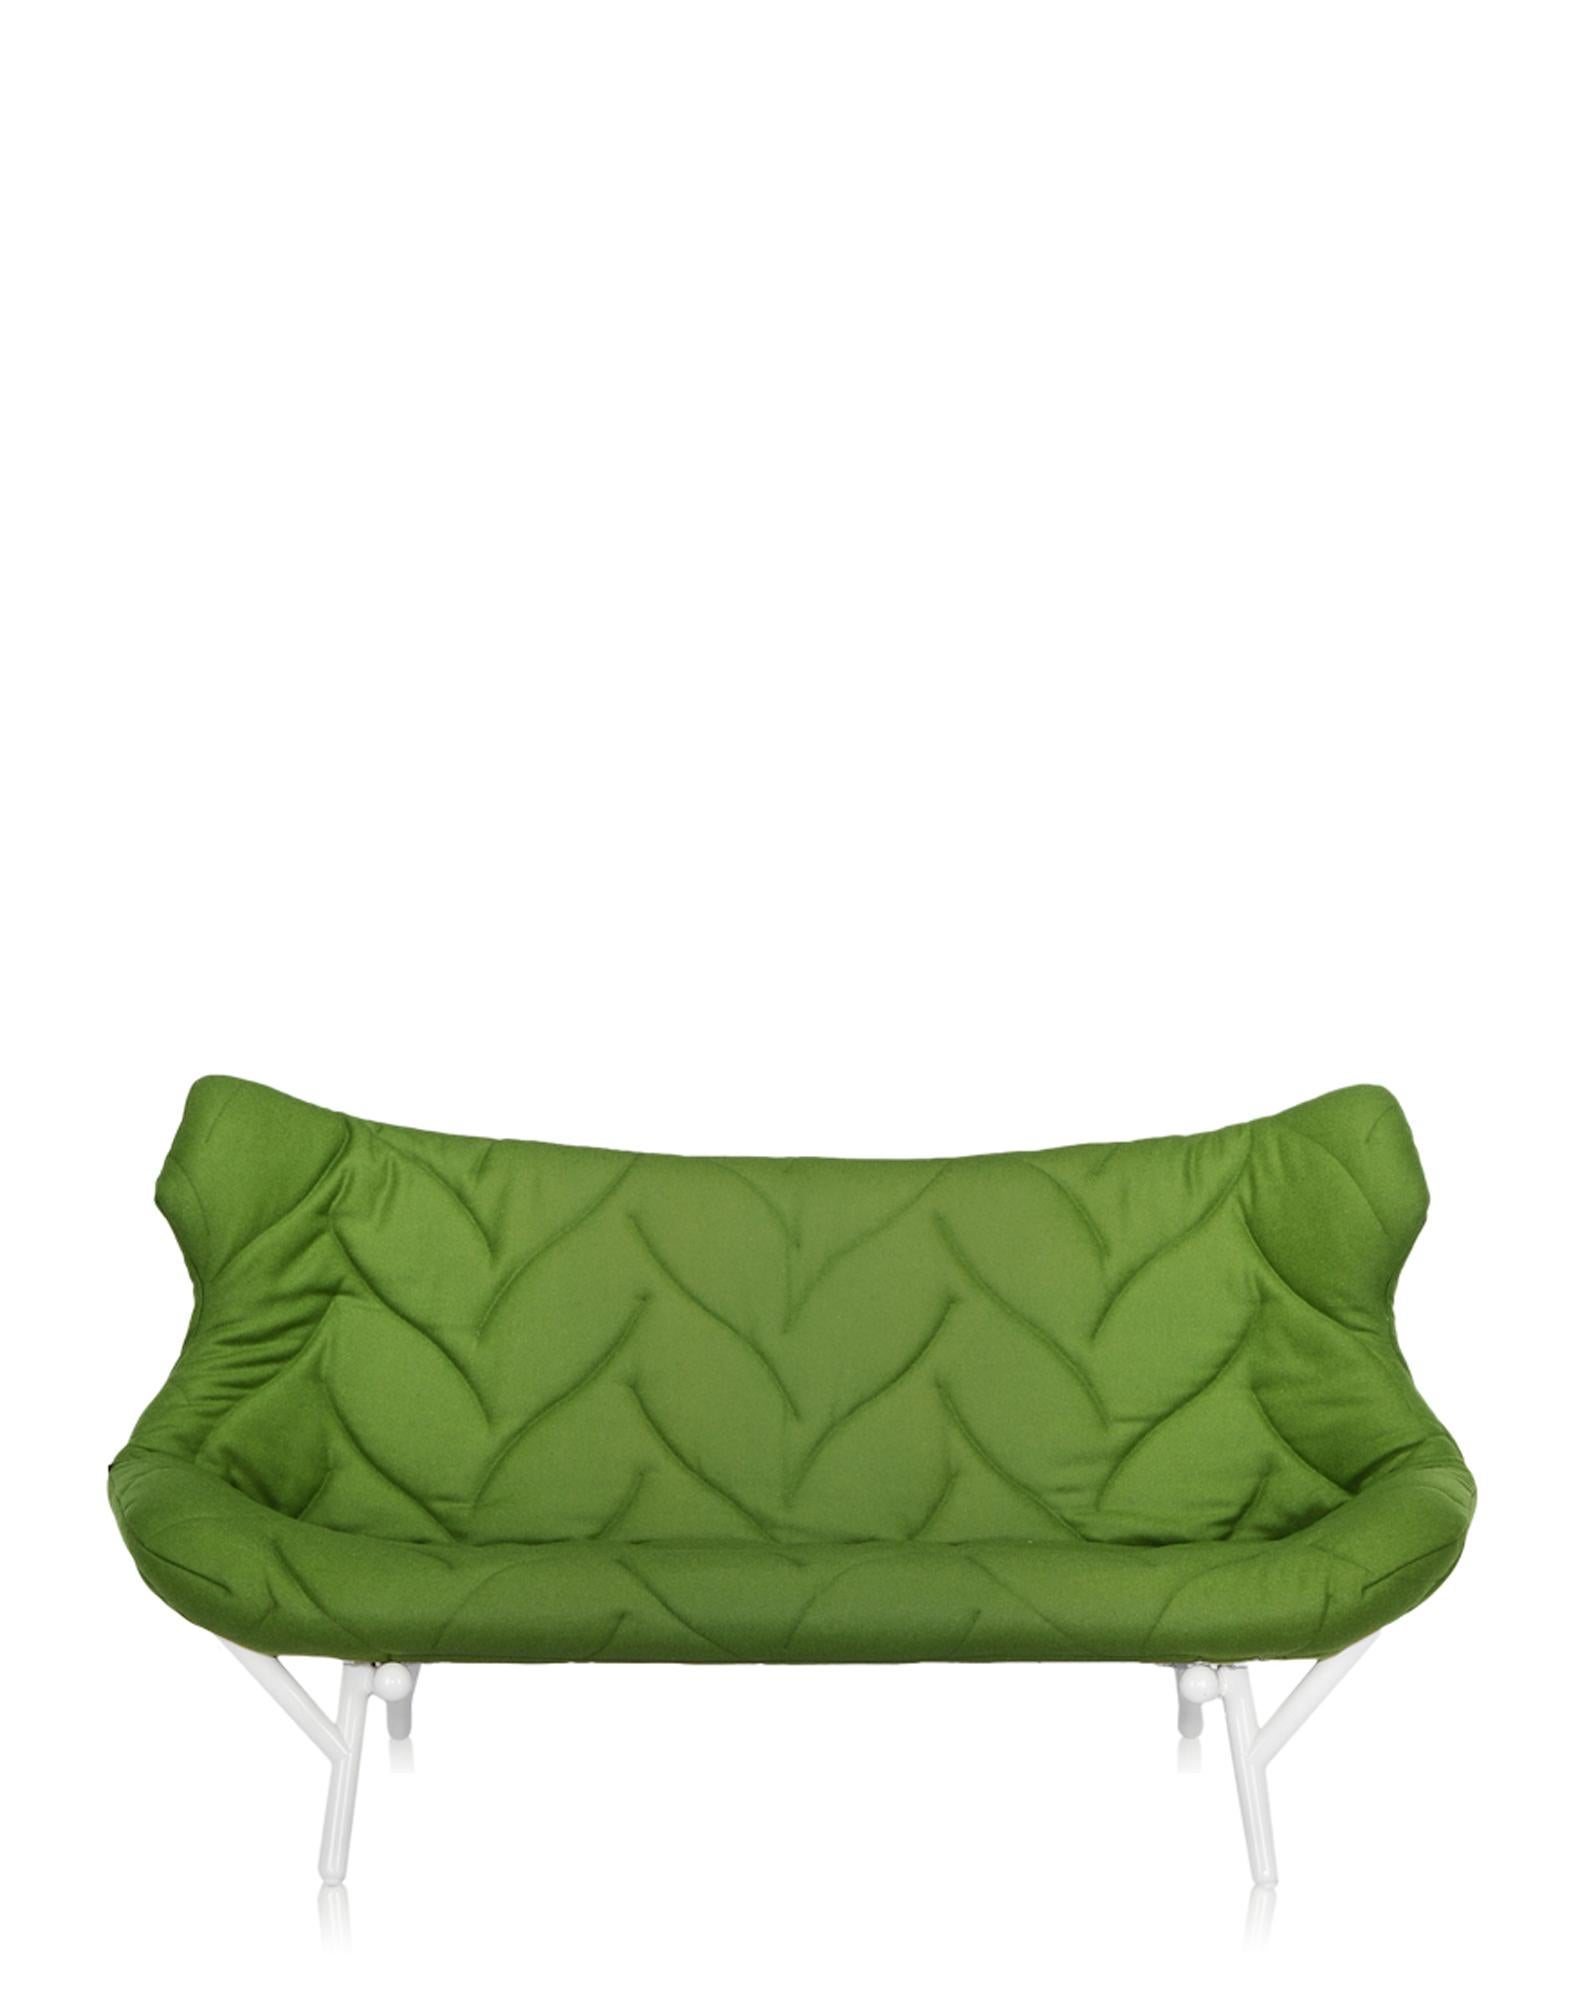 Modern Kartell Foliage Sofa Trevira Green by Patricia Urquiola  For Sale